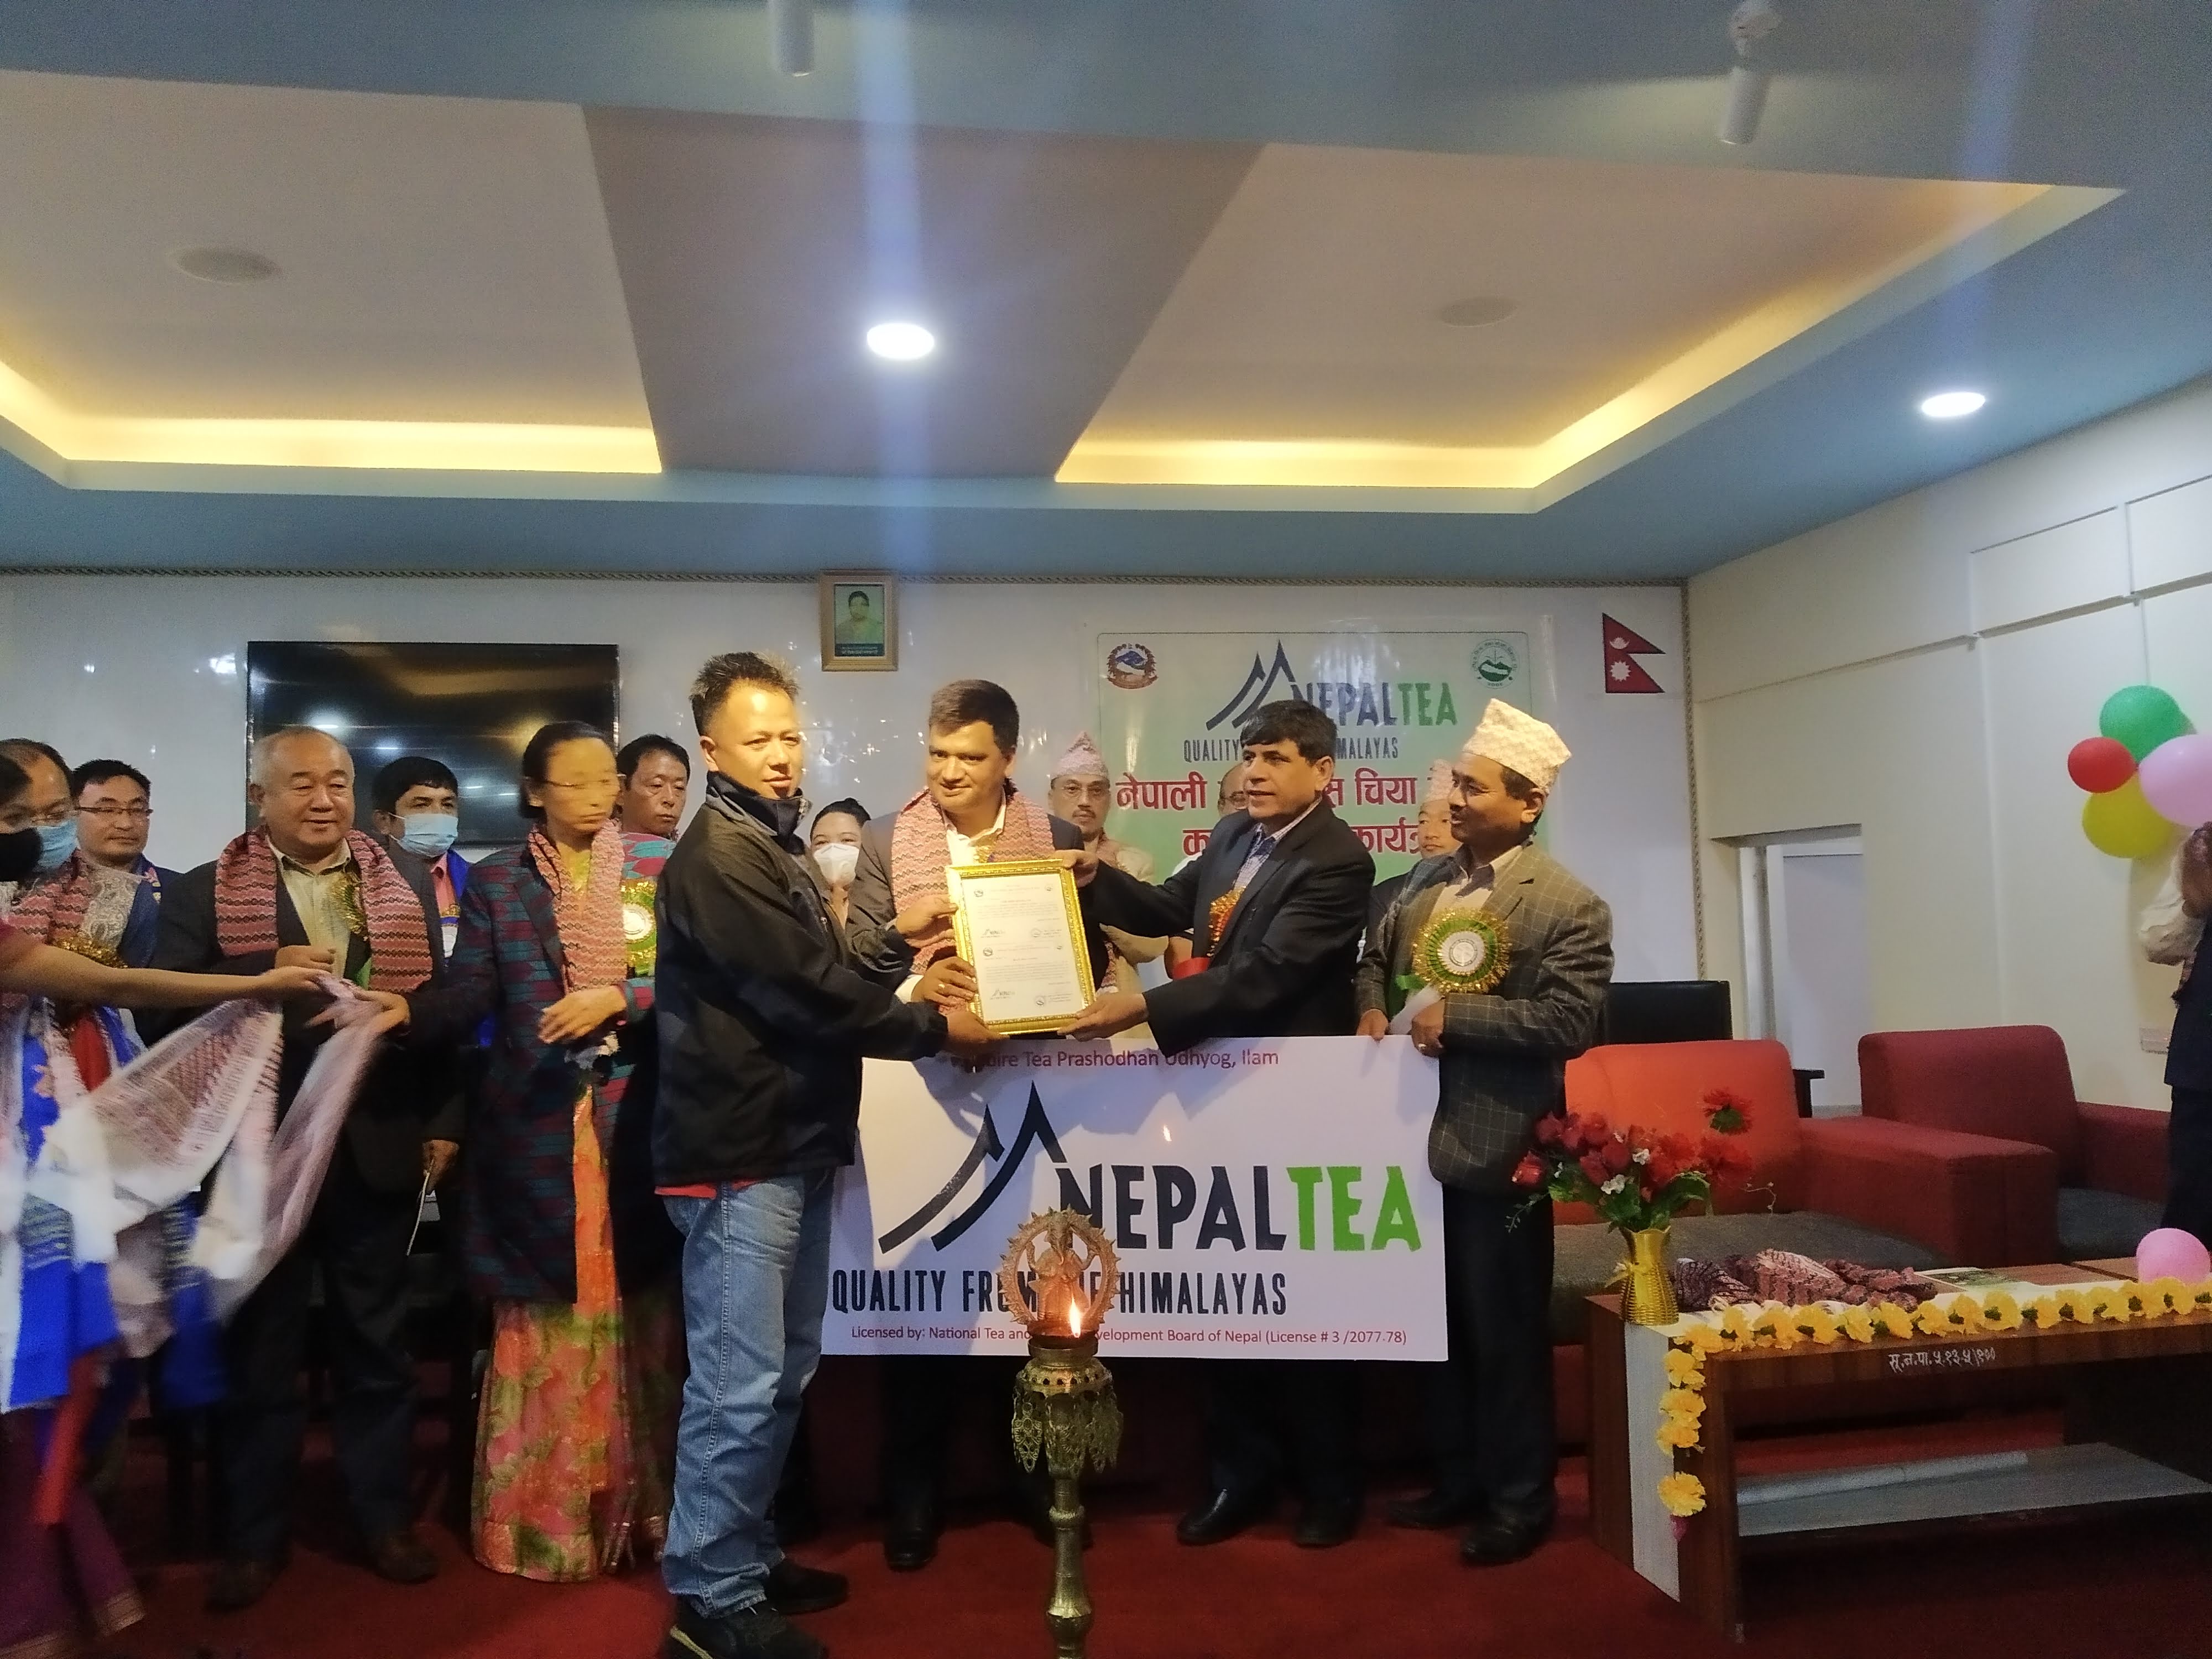 image for Nepal Tea Trademark Implementation Program